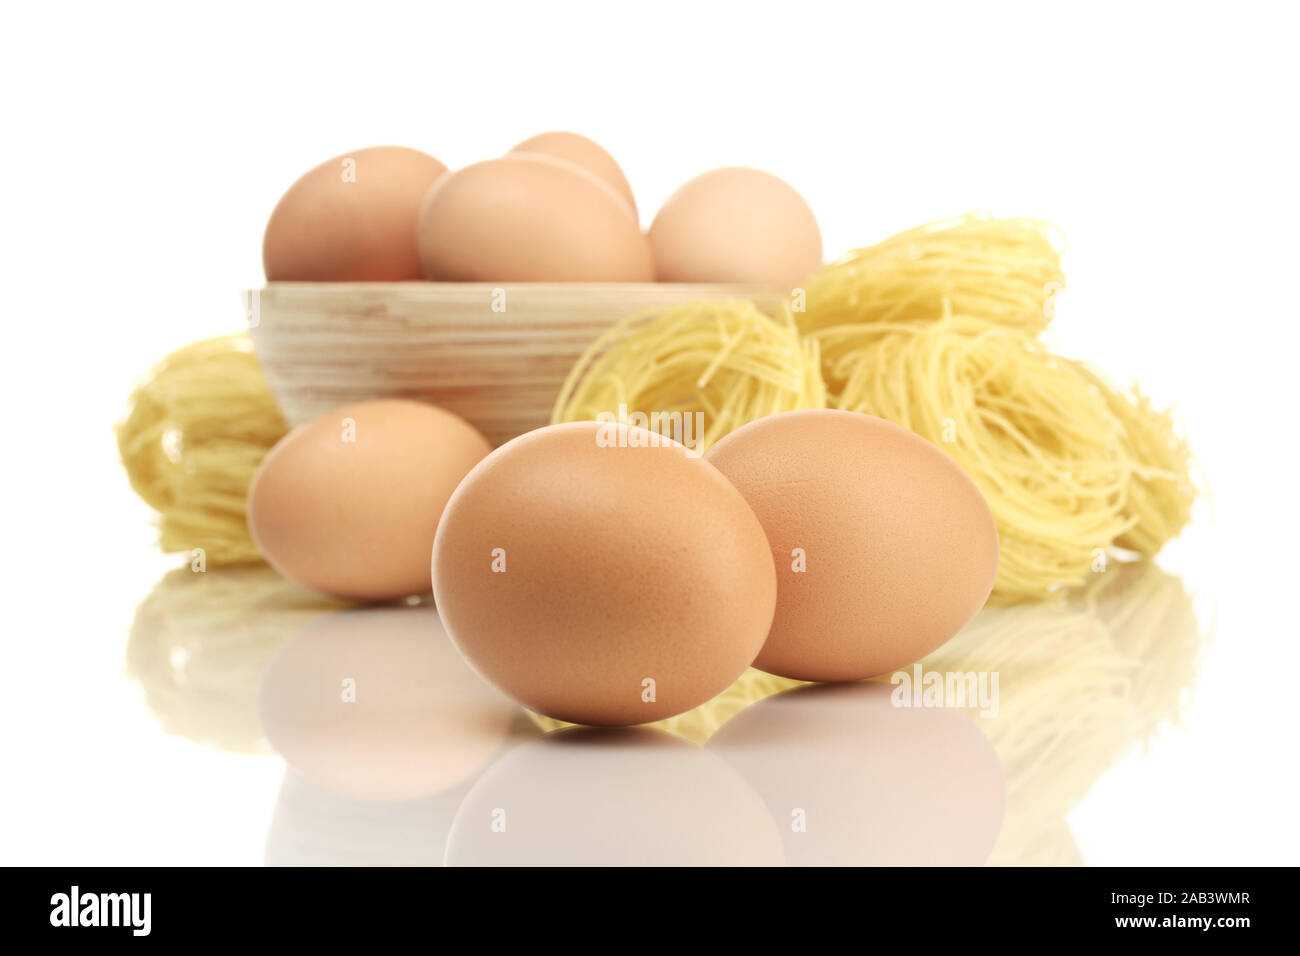 Frische Eier mit Nudeln |Fresh egg with noodles| Stock Photo